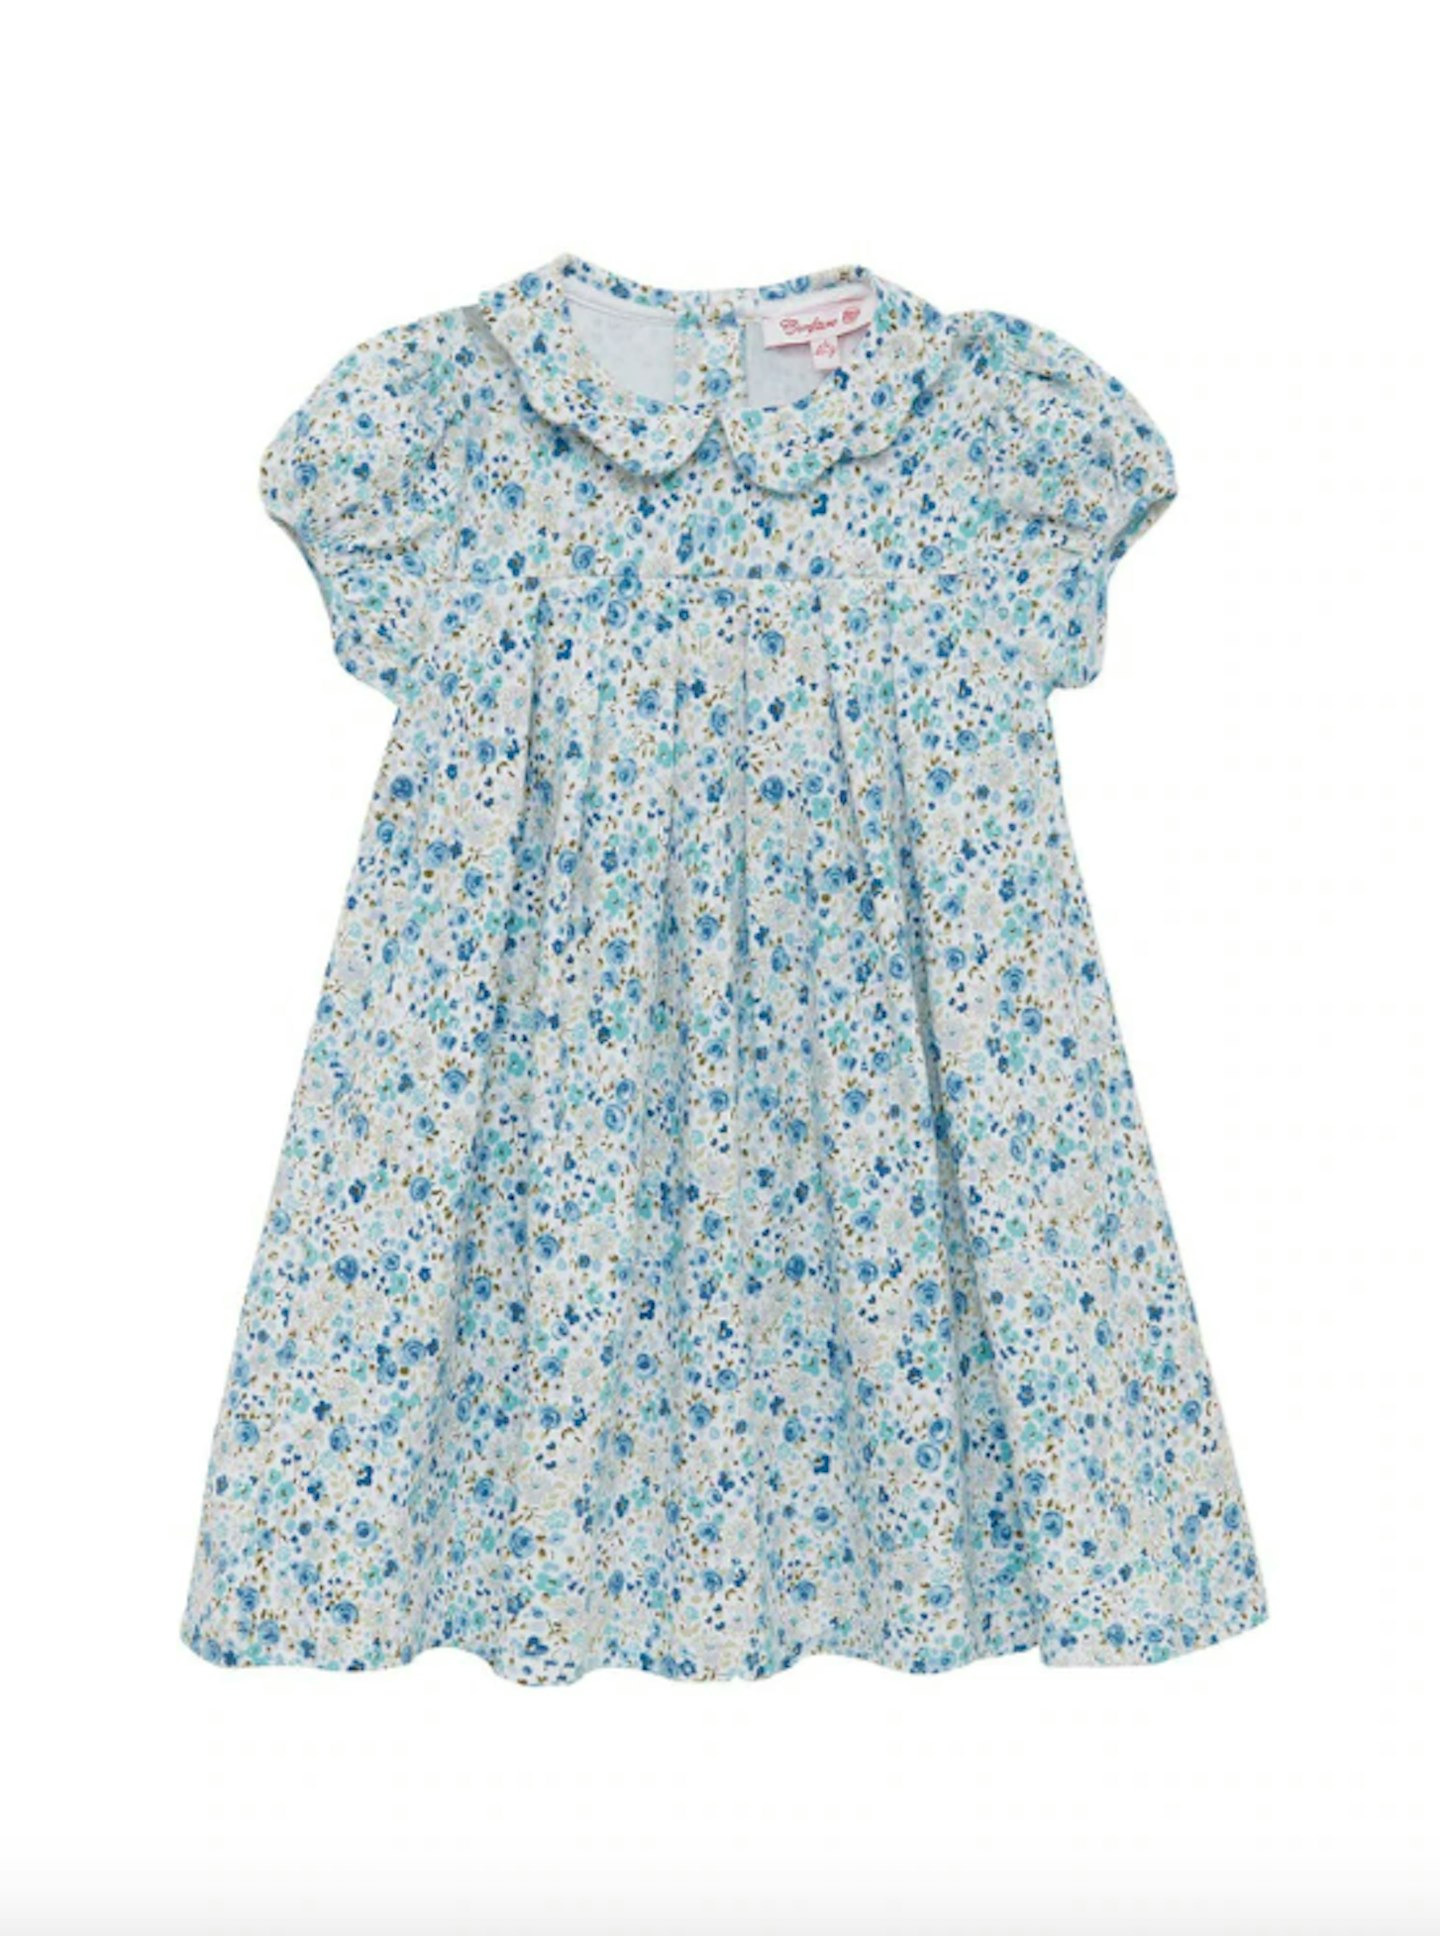 Confiture, Summer Blue Floral Mabel Jersey Dress, WAS £48 NOW £29